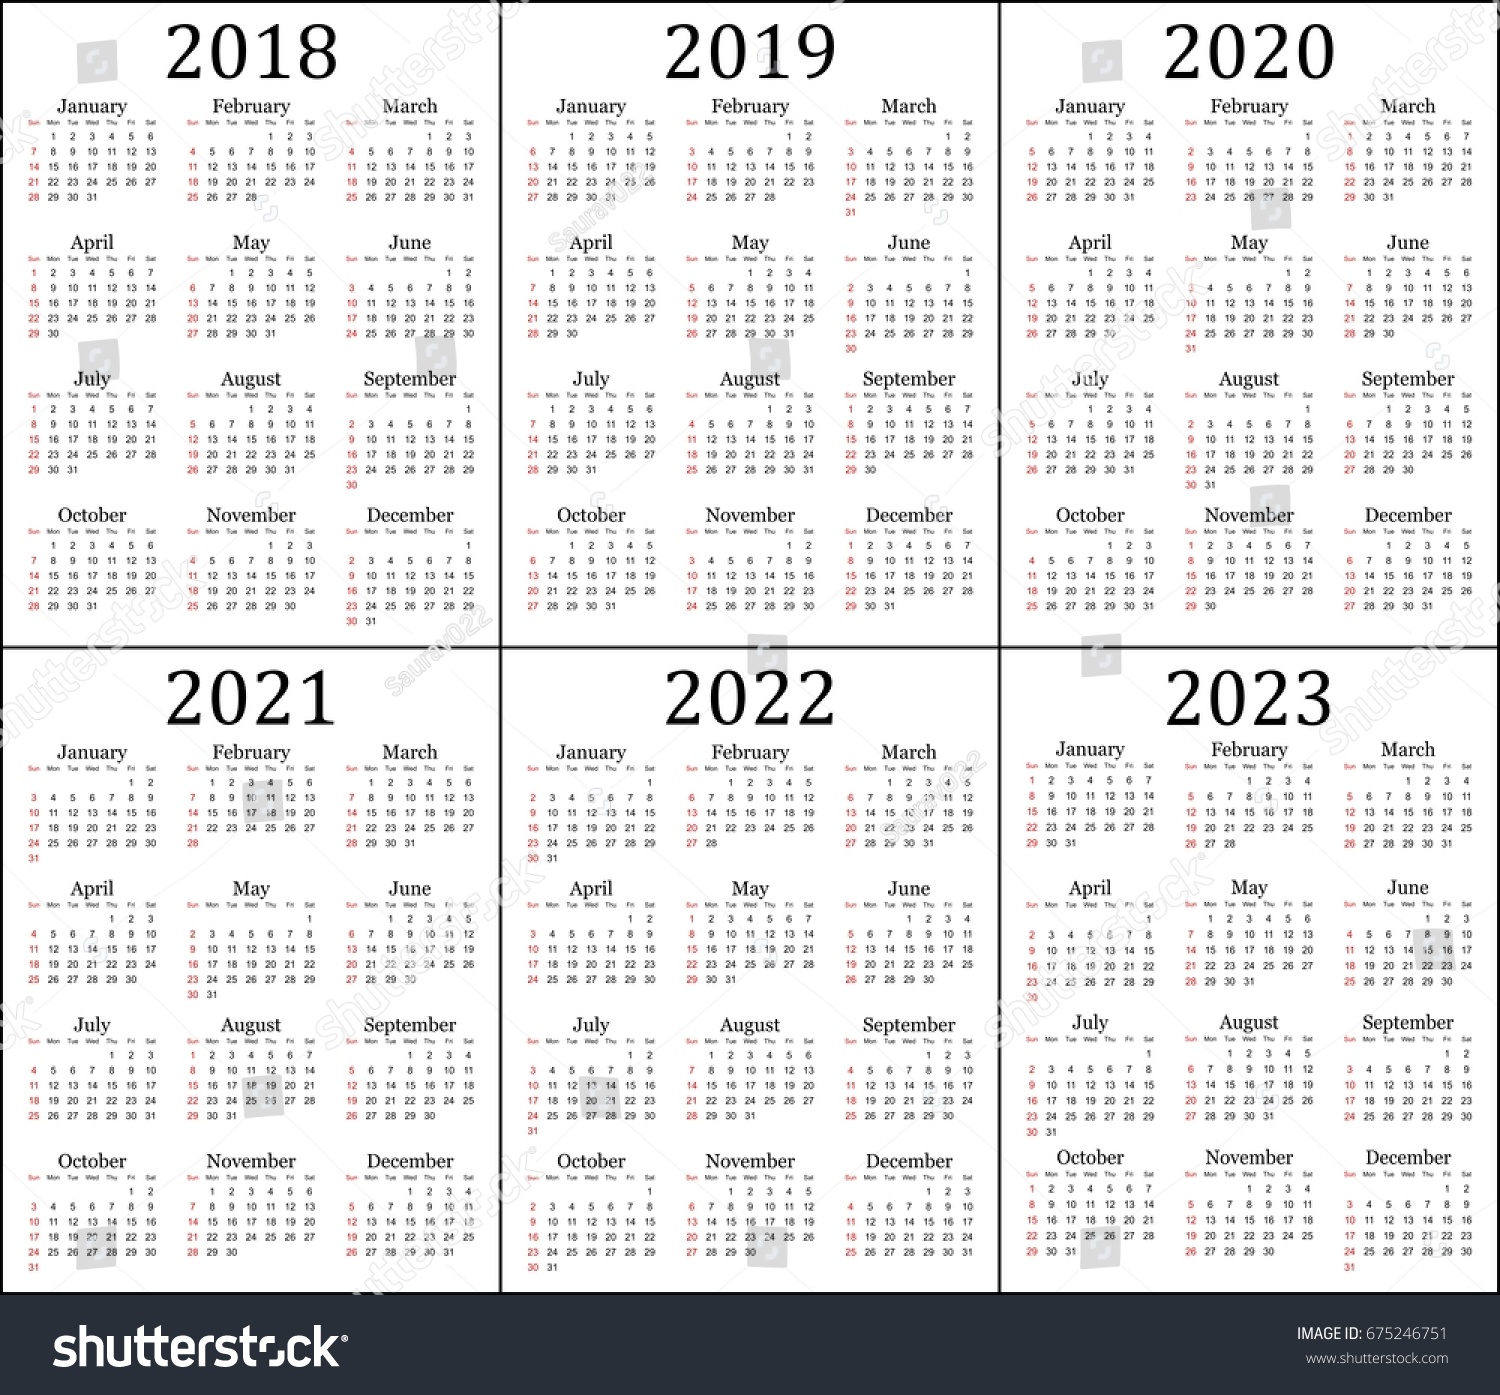 Six Year Calendar 2018 2019 2020 Stock Vector (Royalty Free) 675246751